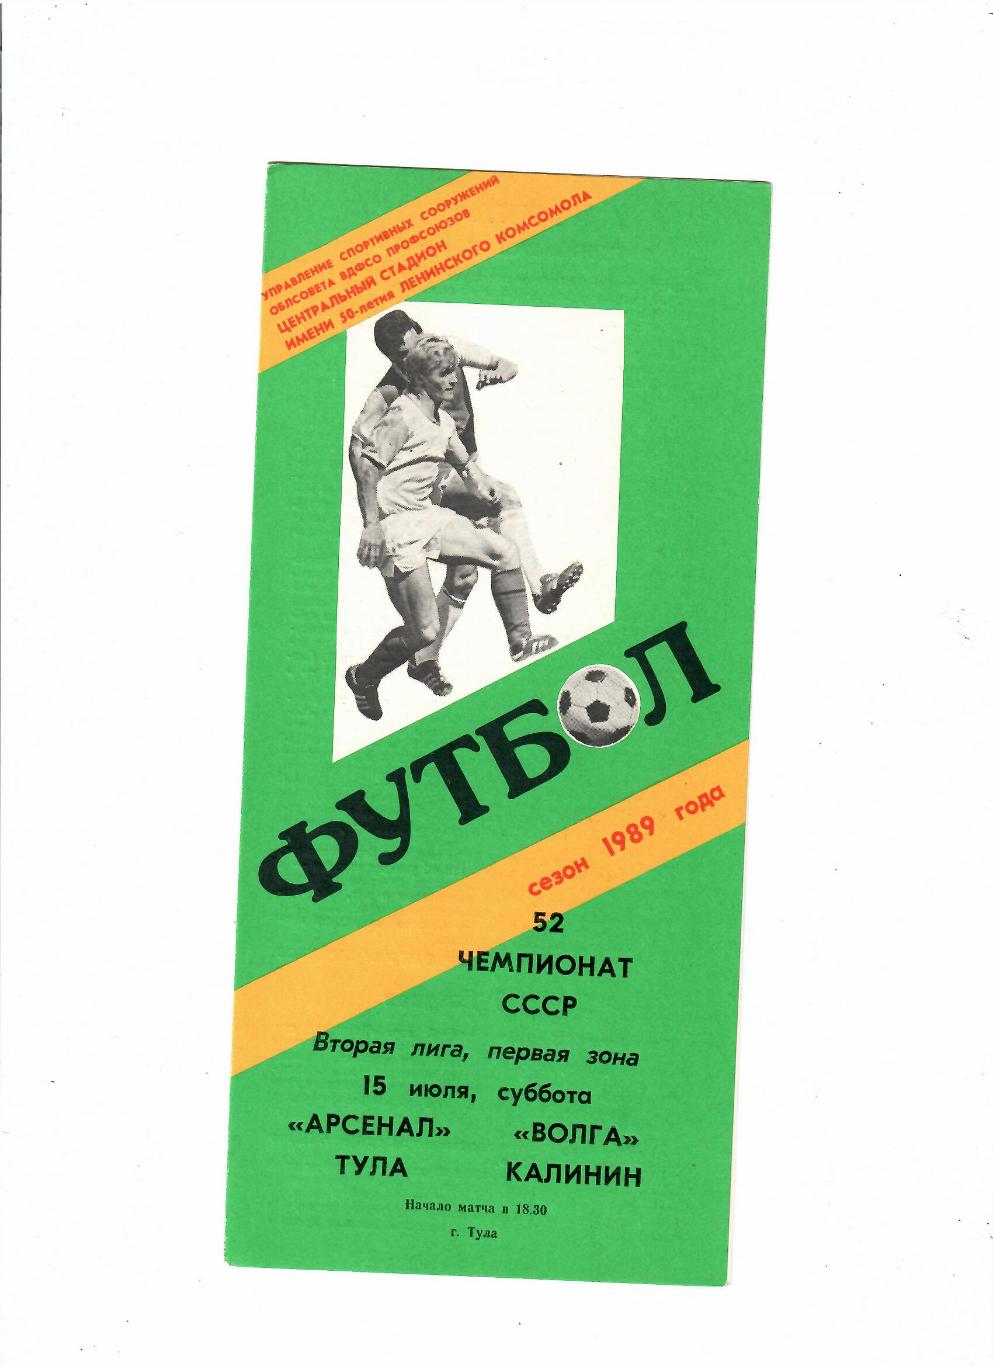 Арсенал Тула-Волга Калинин 1989